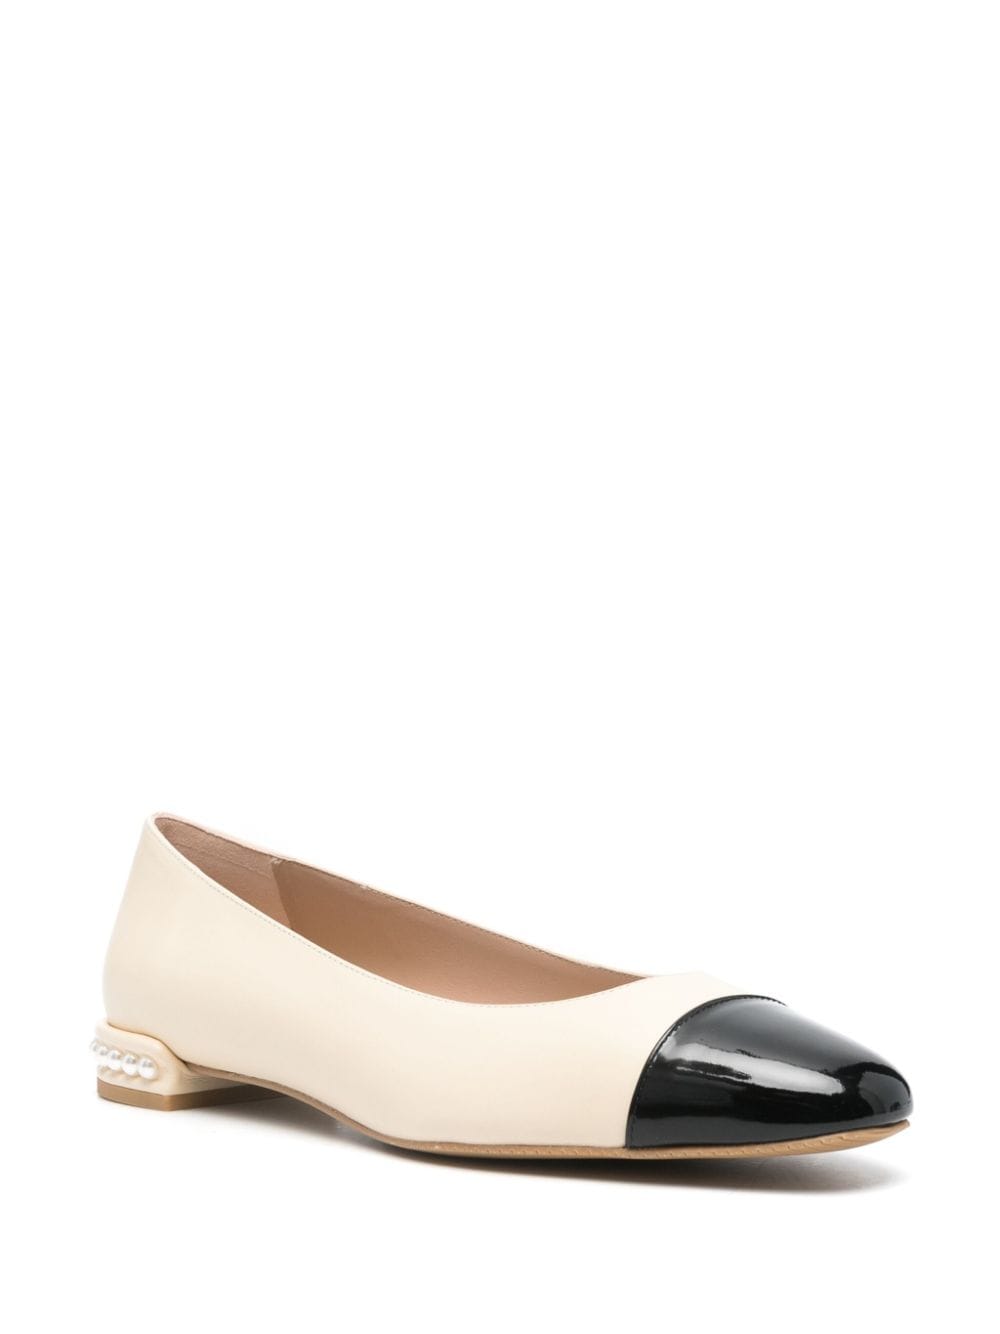 Stuart Weitzman Pearl Flat leather ballerina shoes - Beige